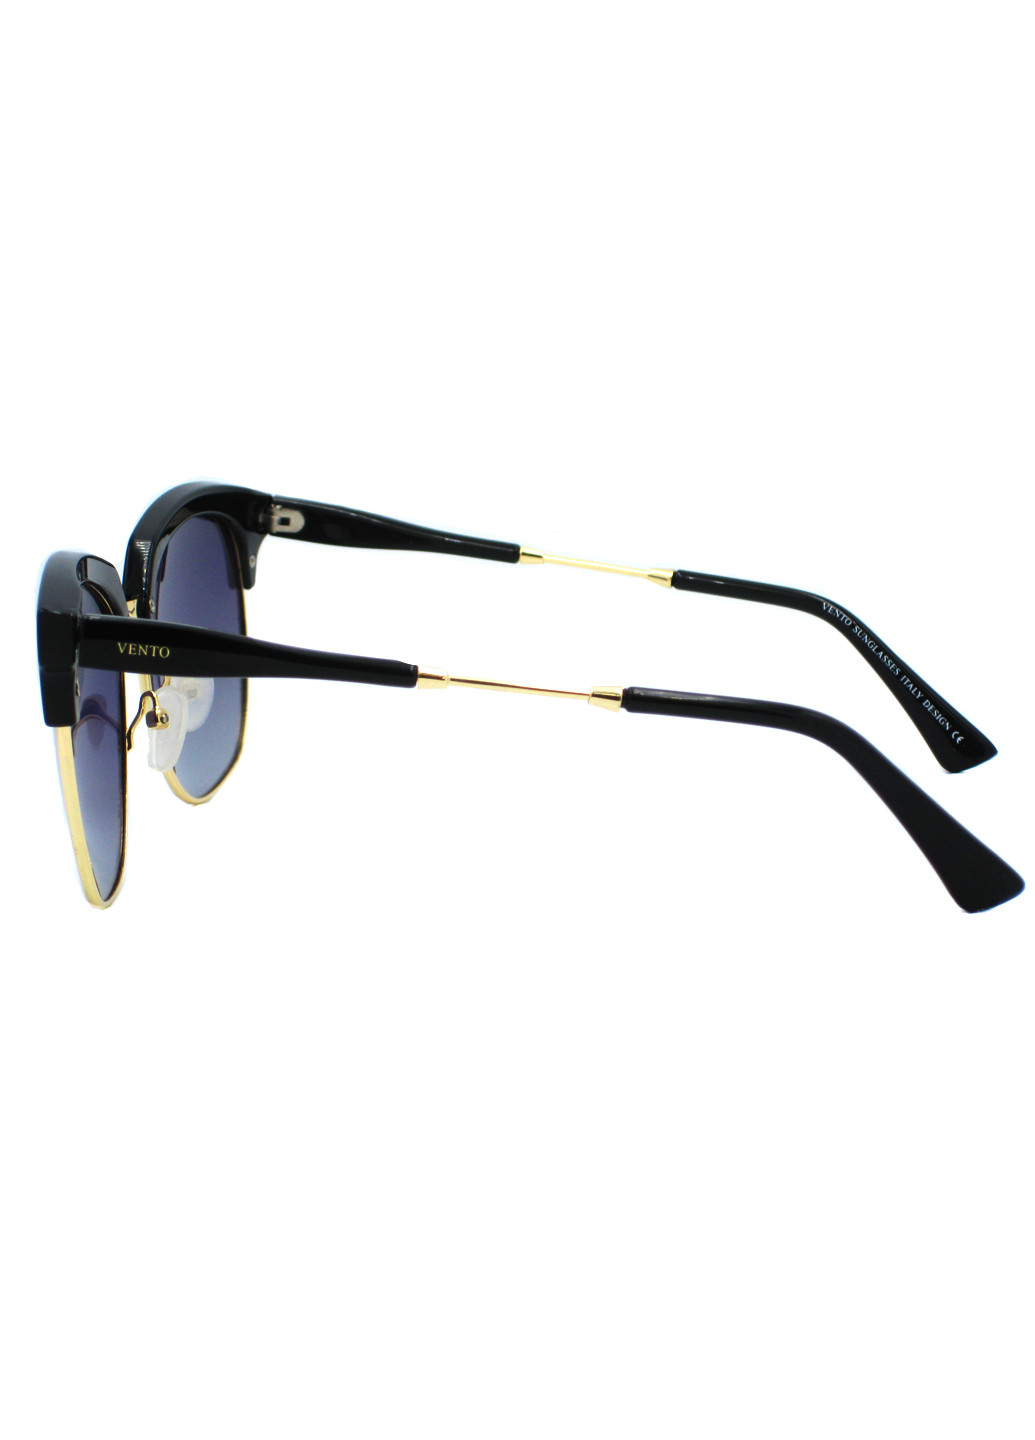 Cолнцезащитные очки Vento vns144 (203027062)